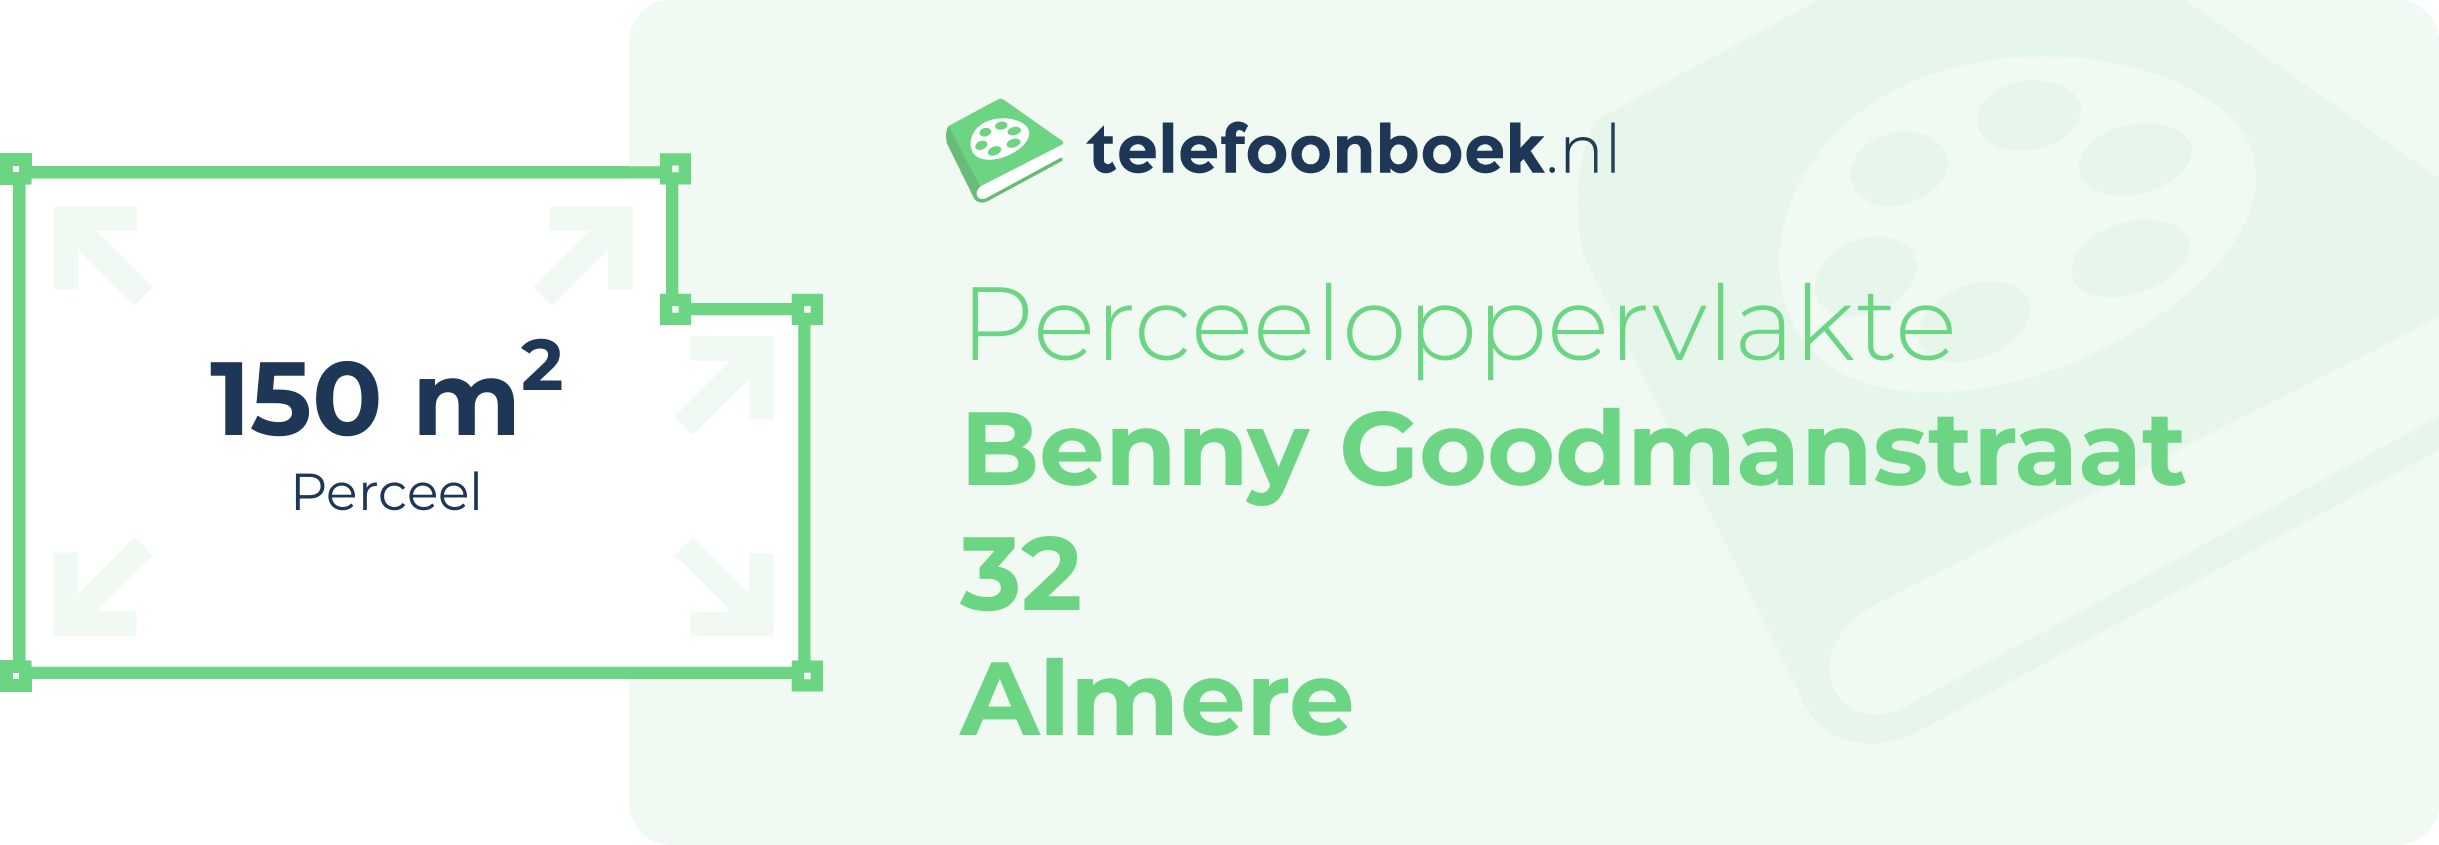 Perceeloppervlakte Benny Goodmanstraat 32 Almere